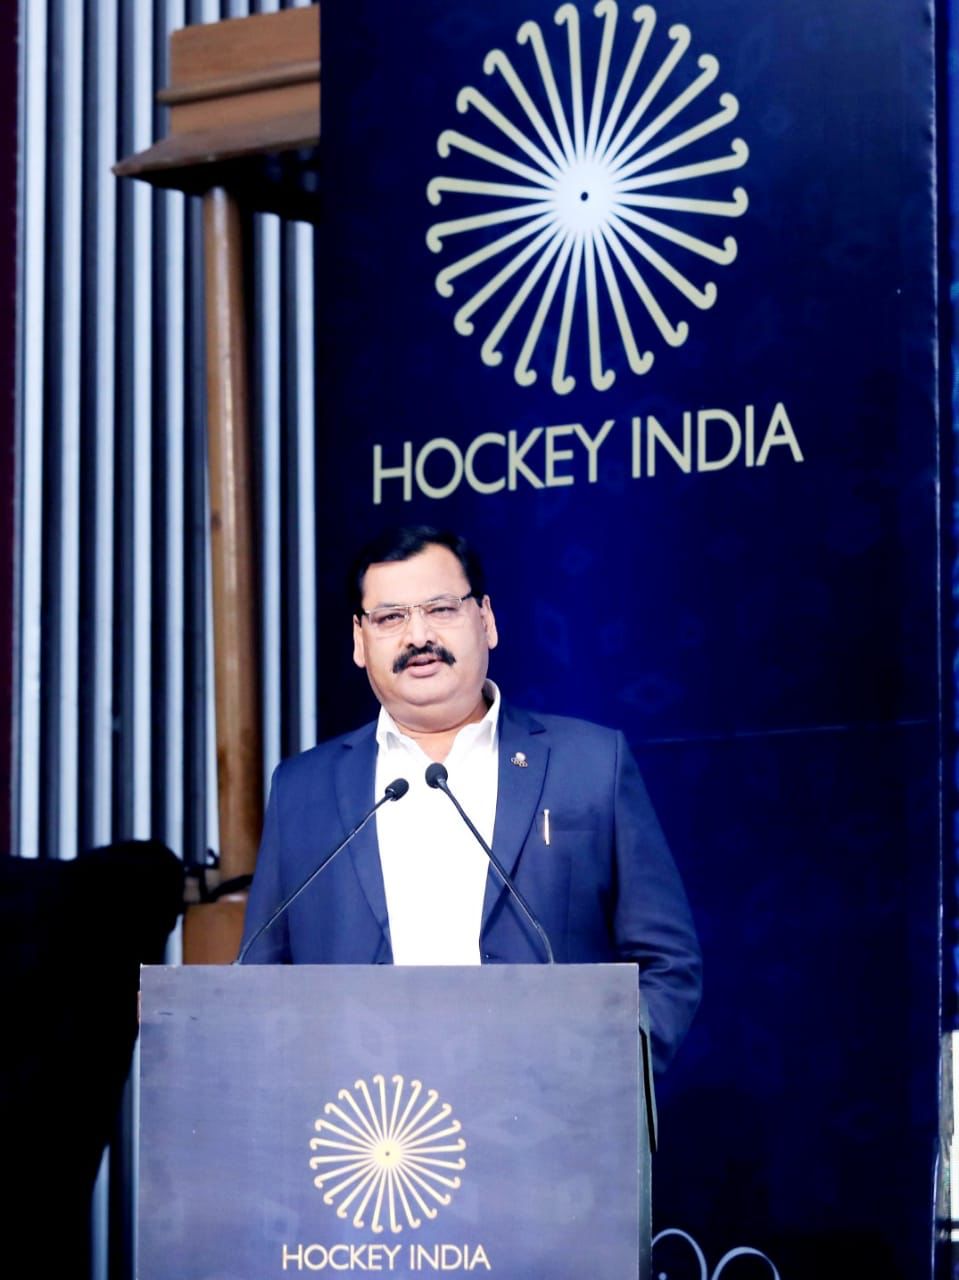 Hockey-India-Secretary-General-cum-Hockey-Jharkhand-President-Bholanath-Singh-to-attend-Asian-Hockey-Federation-Congress-off-to-korea